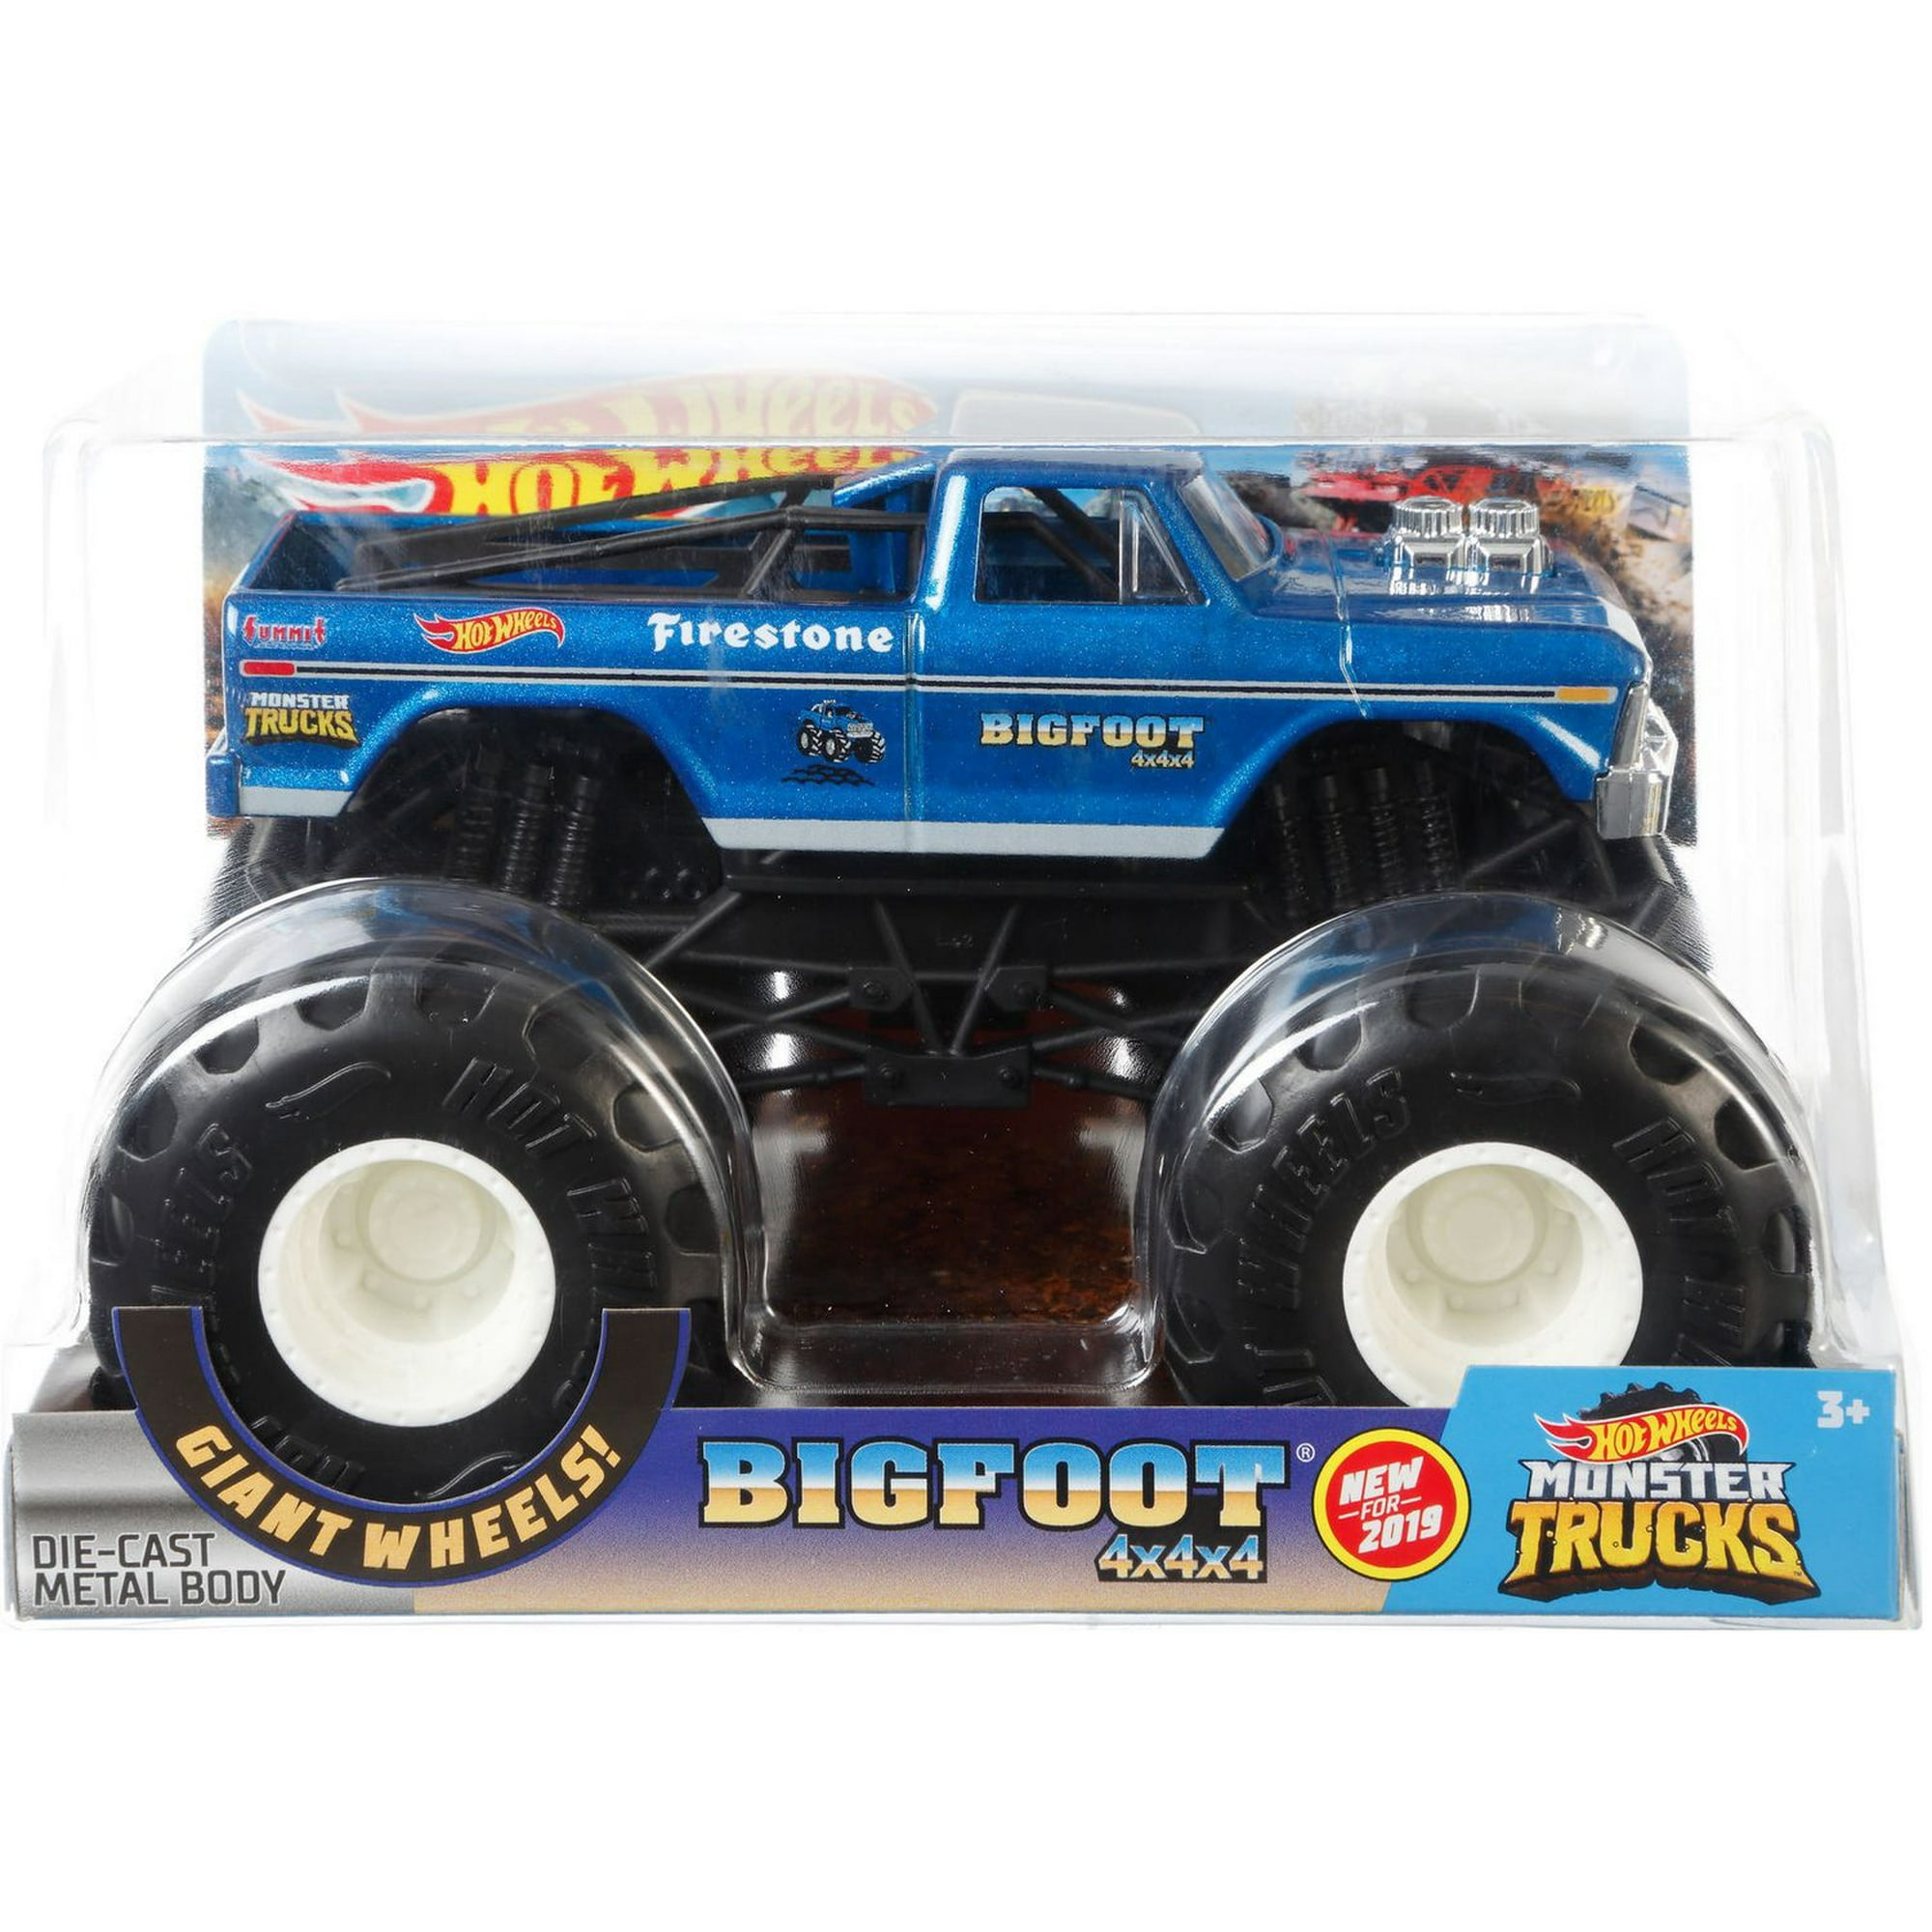 MEGA Hot Wheels Bigfoot Monster Truck Building Set